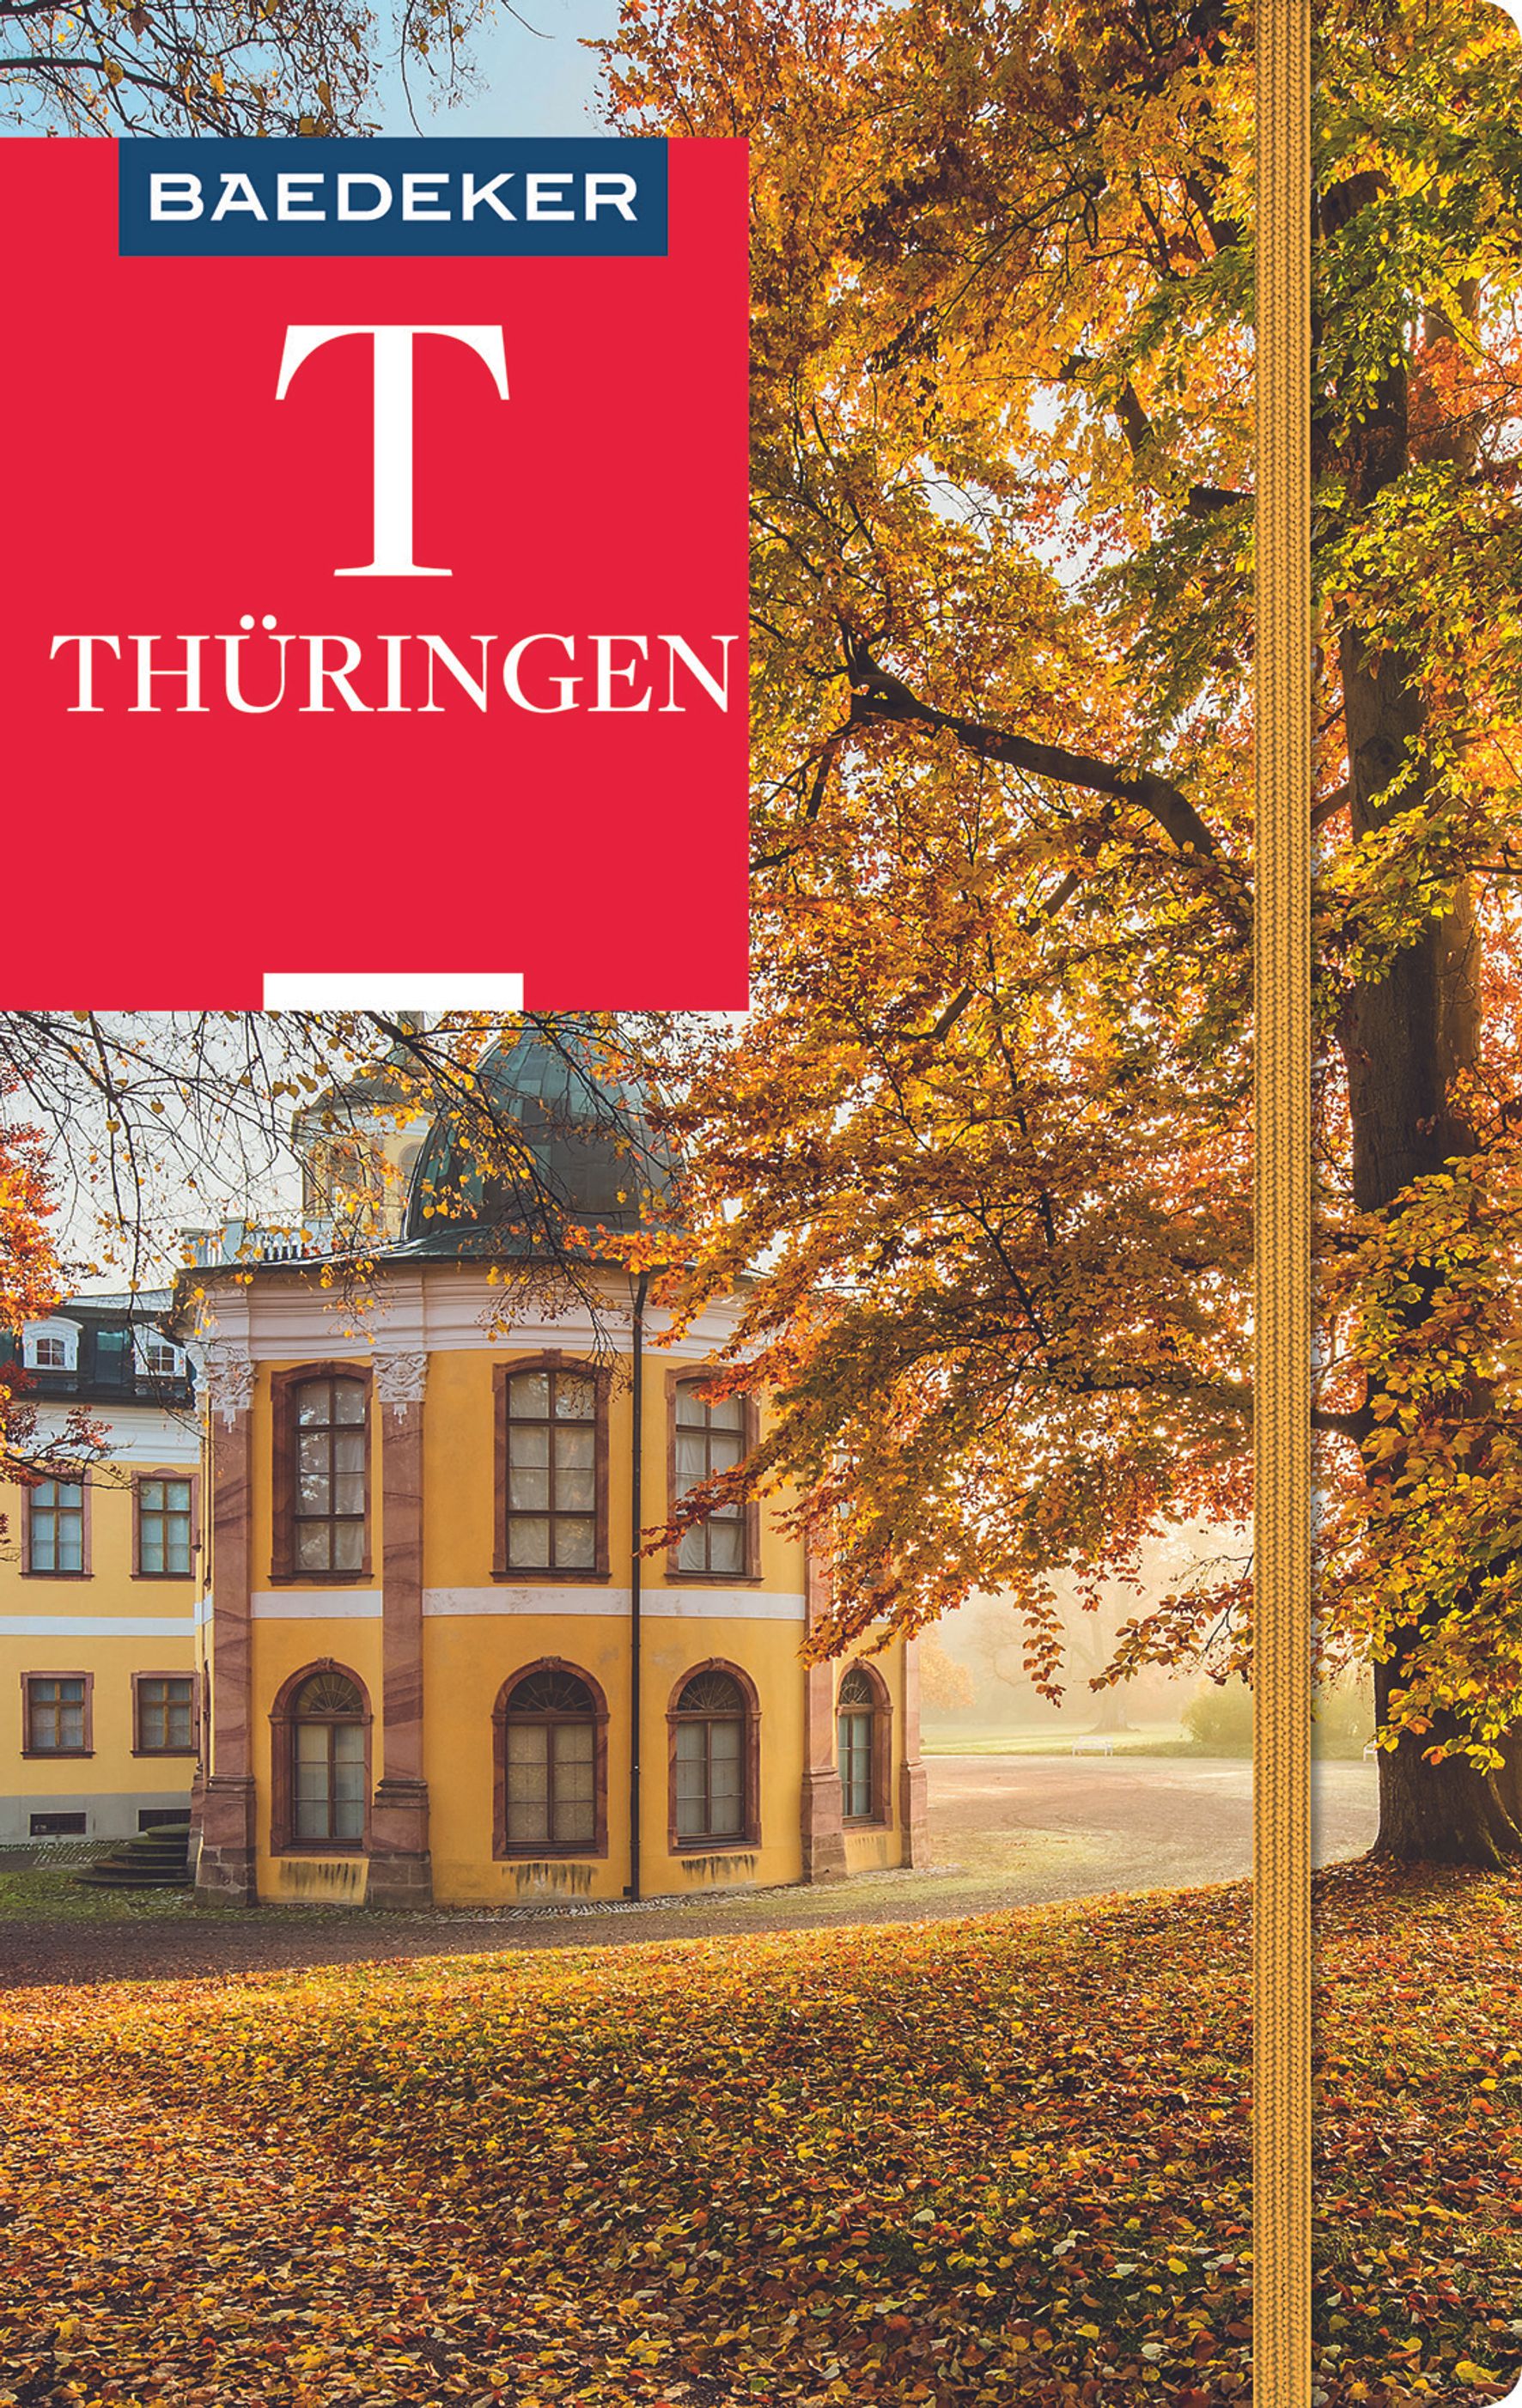 Baedeker Thüringen (eBook)